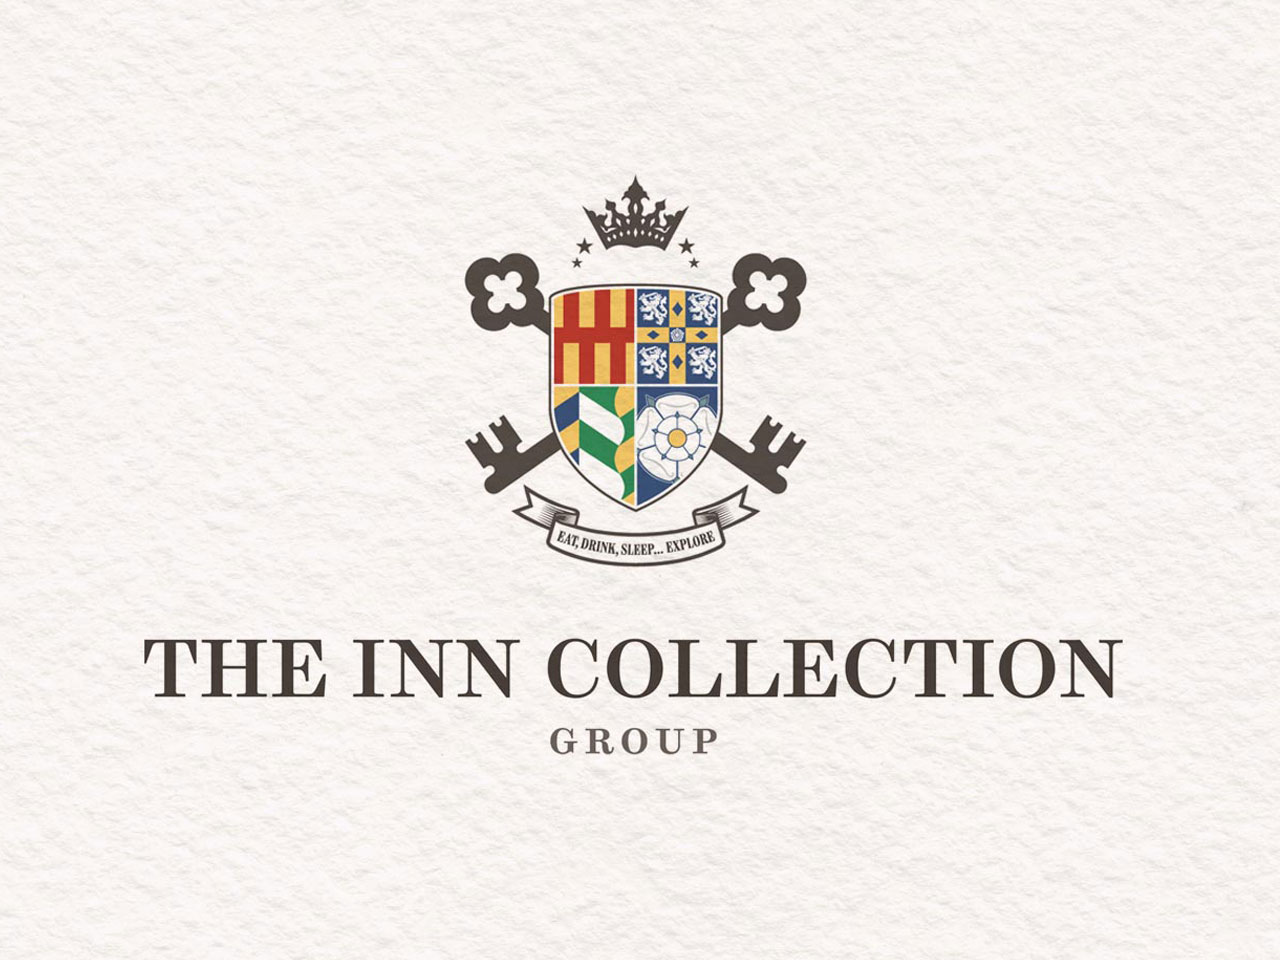 Inn Collection Group logo